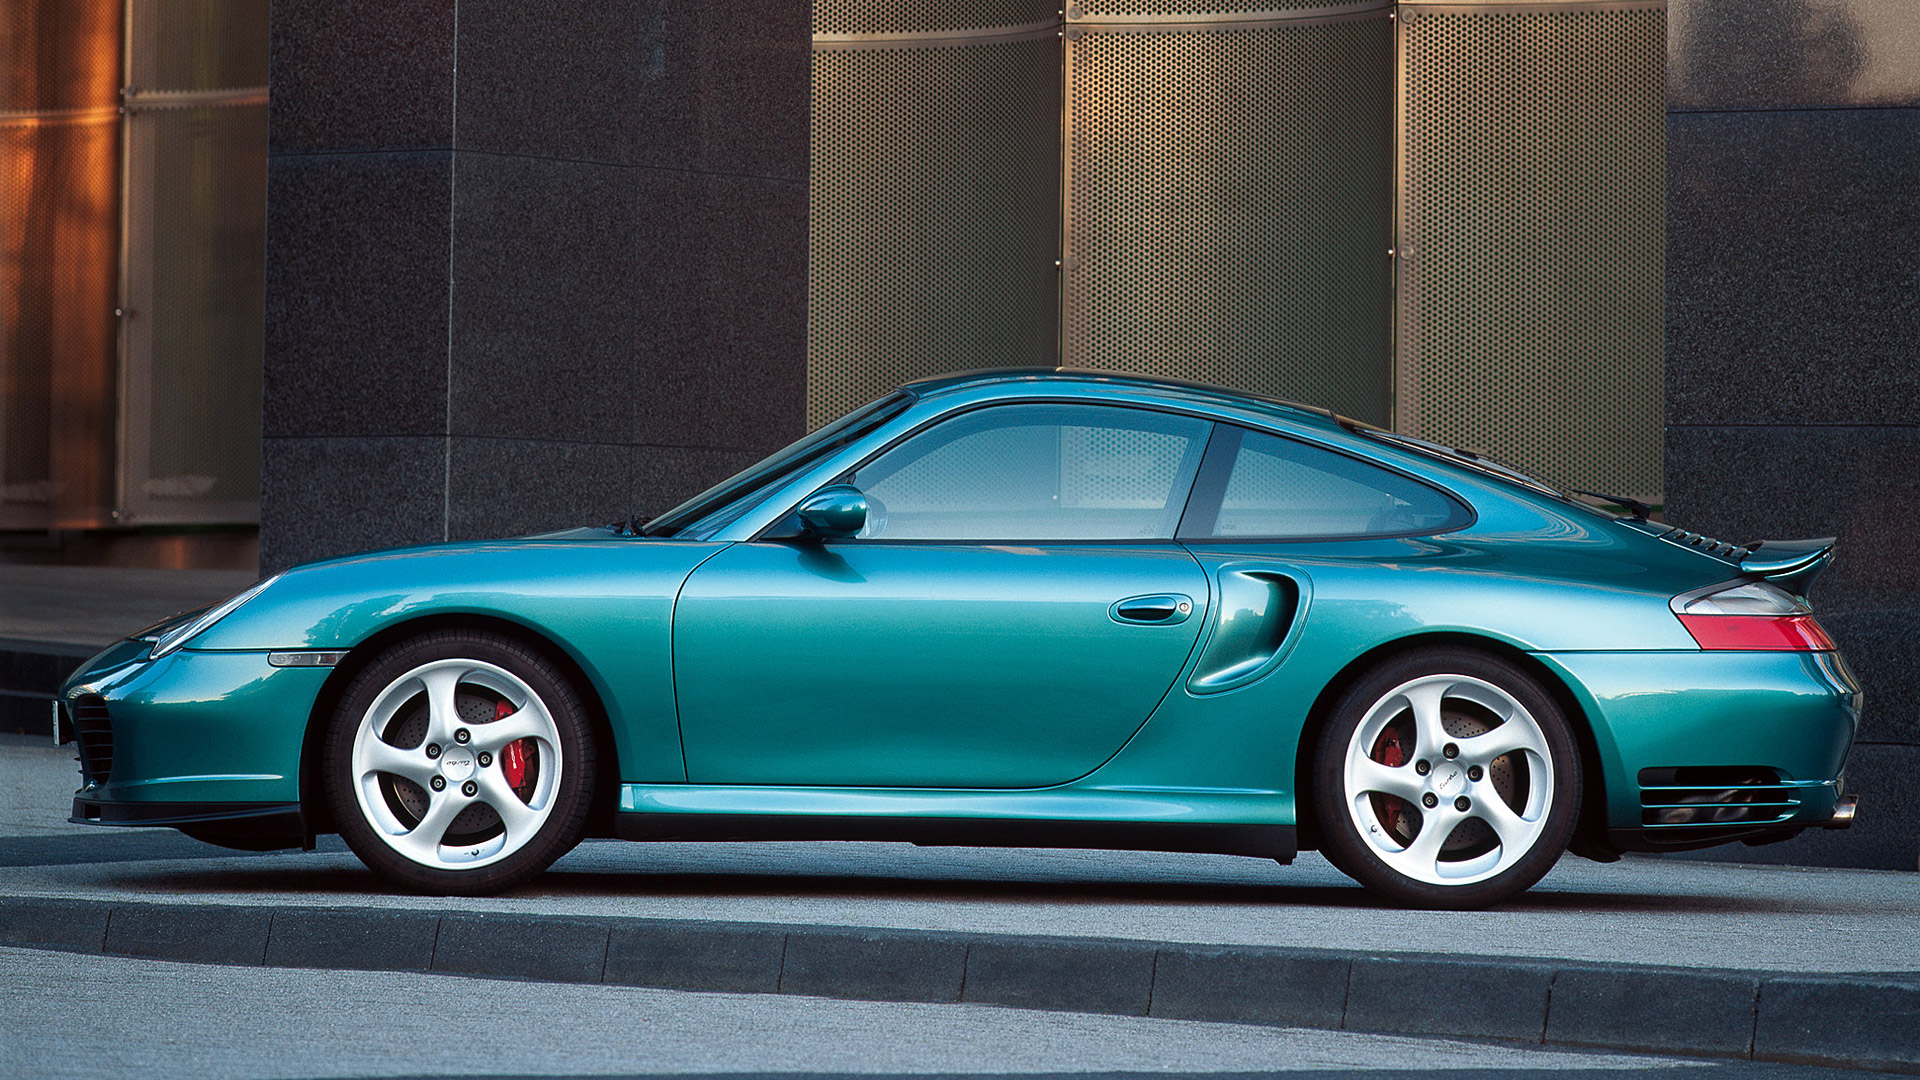  2002 Porsche 911 Turbo Wallpaper.